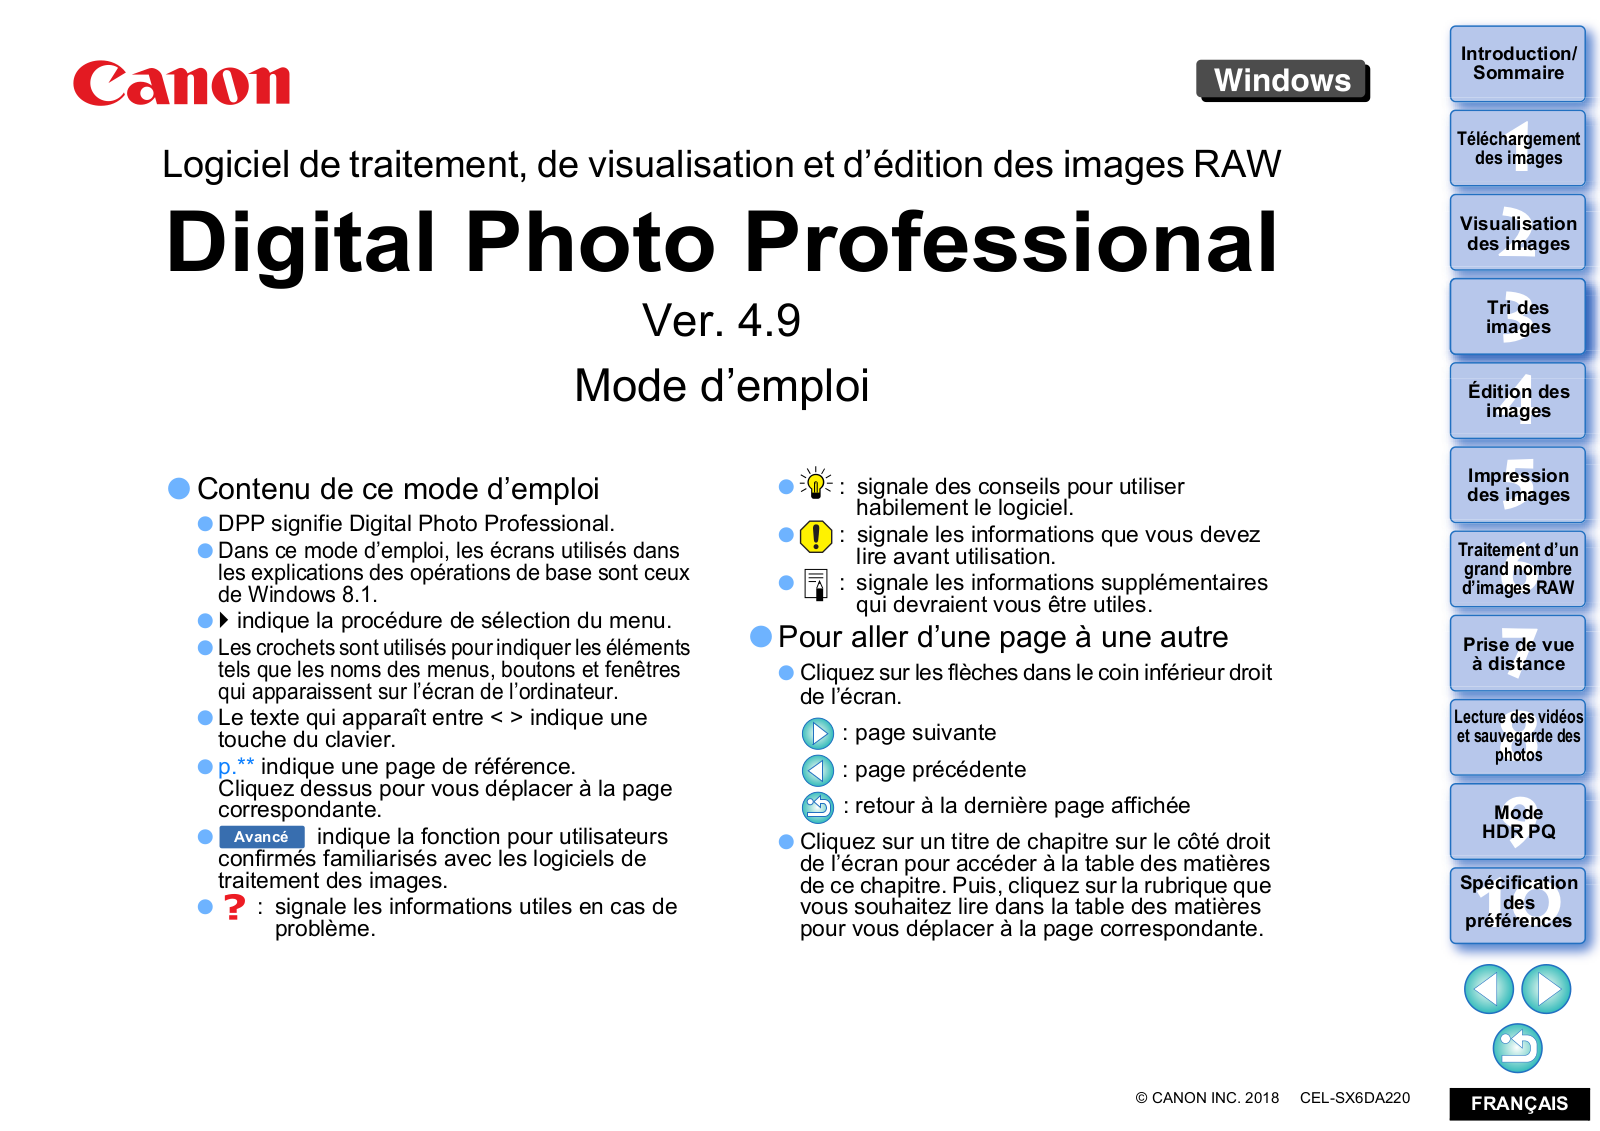 Canon digital photo professional v 4.9 User Manual